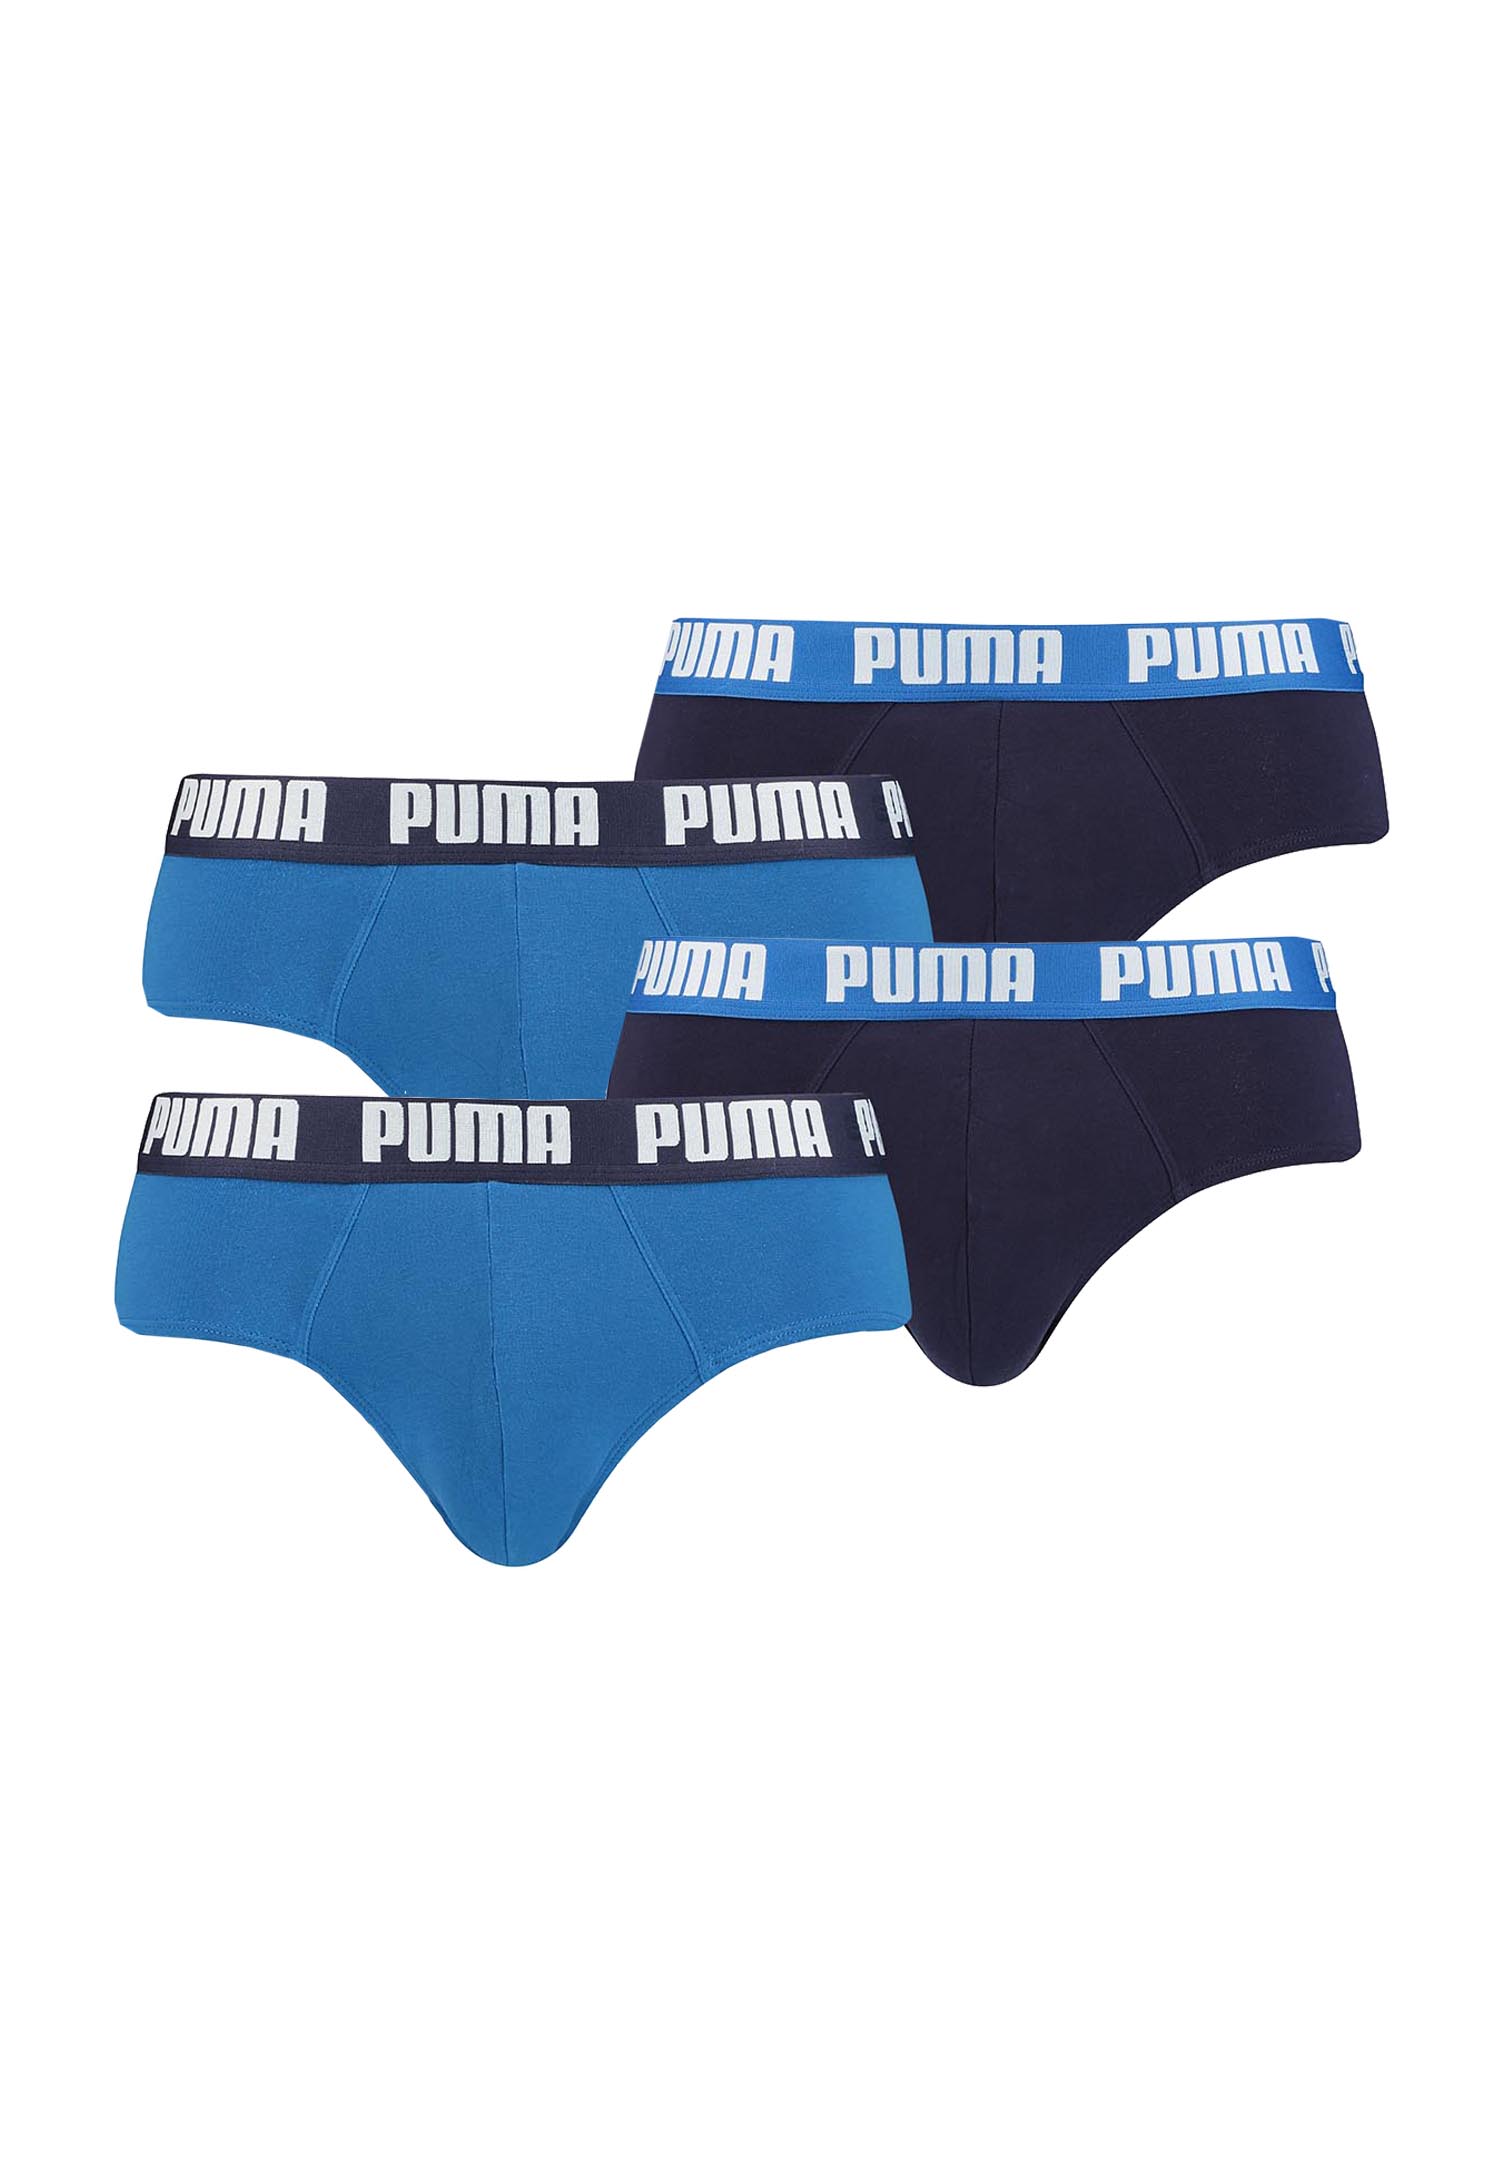 Puma Slip, Basic Herren brief (2er Set), Blau (marineblau), 31-34 EU (Large)